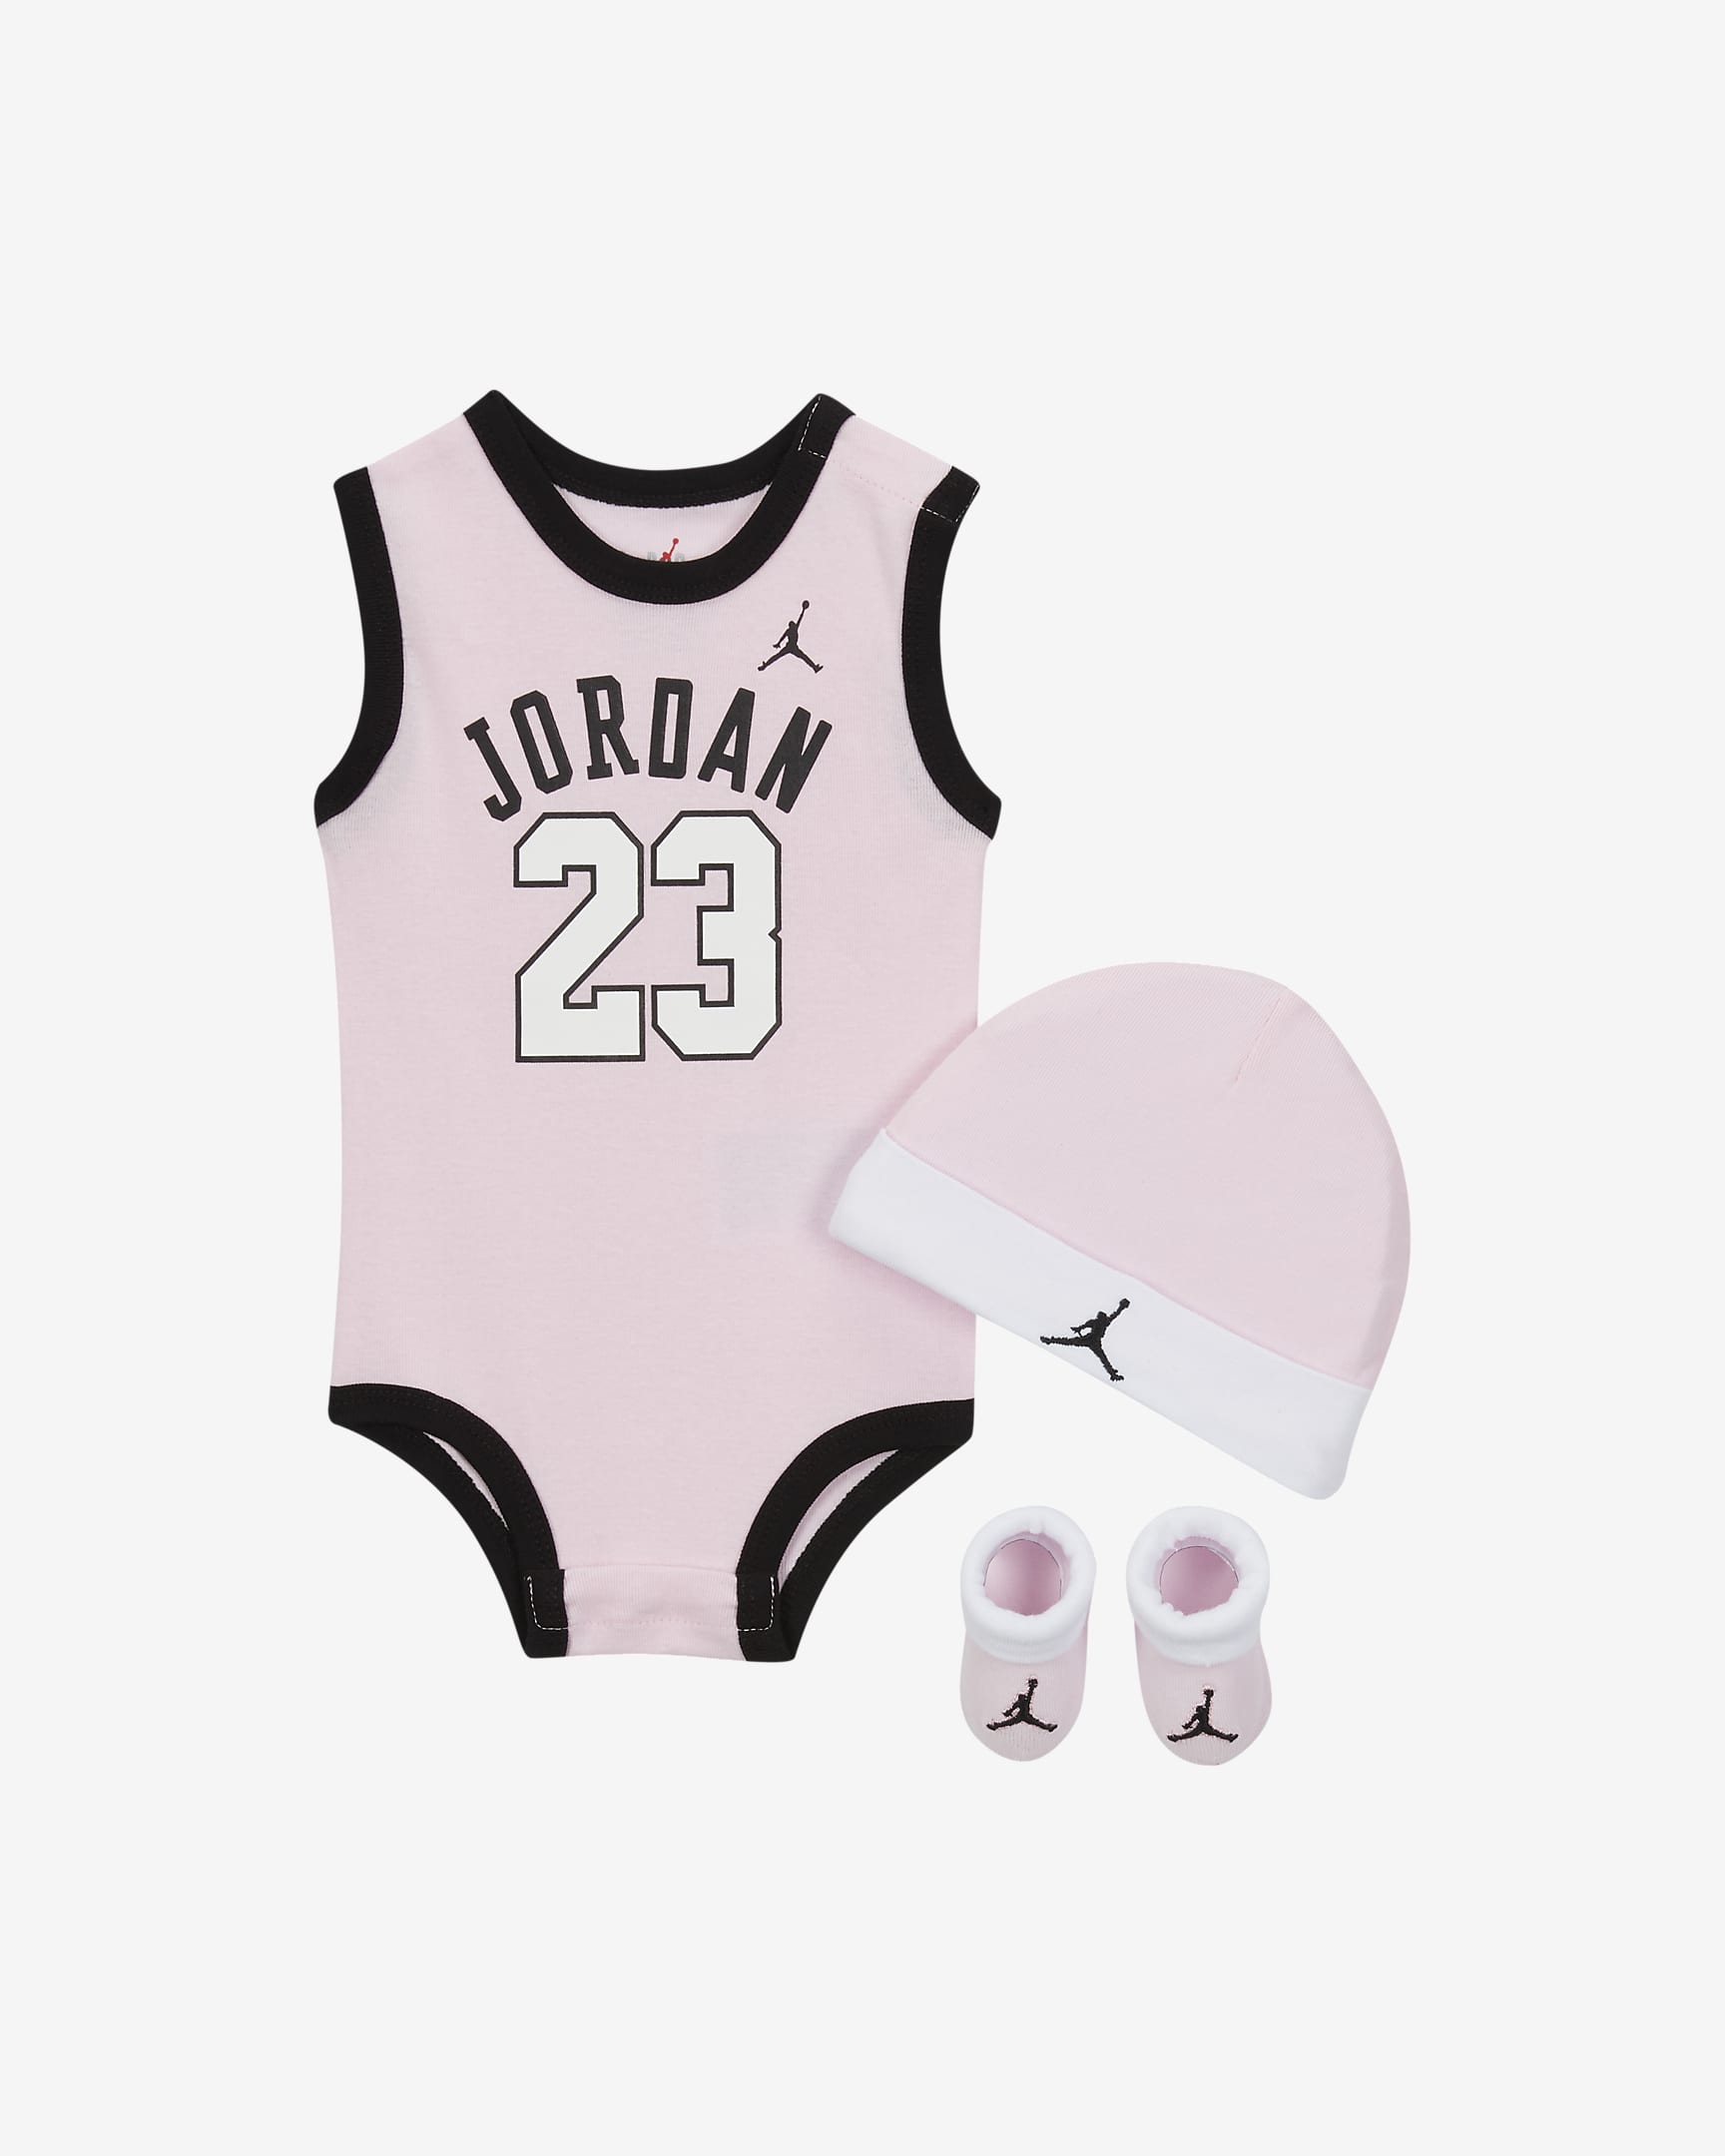 Jordan Baby Gift Box 